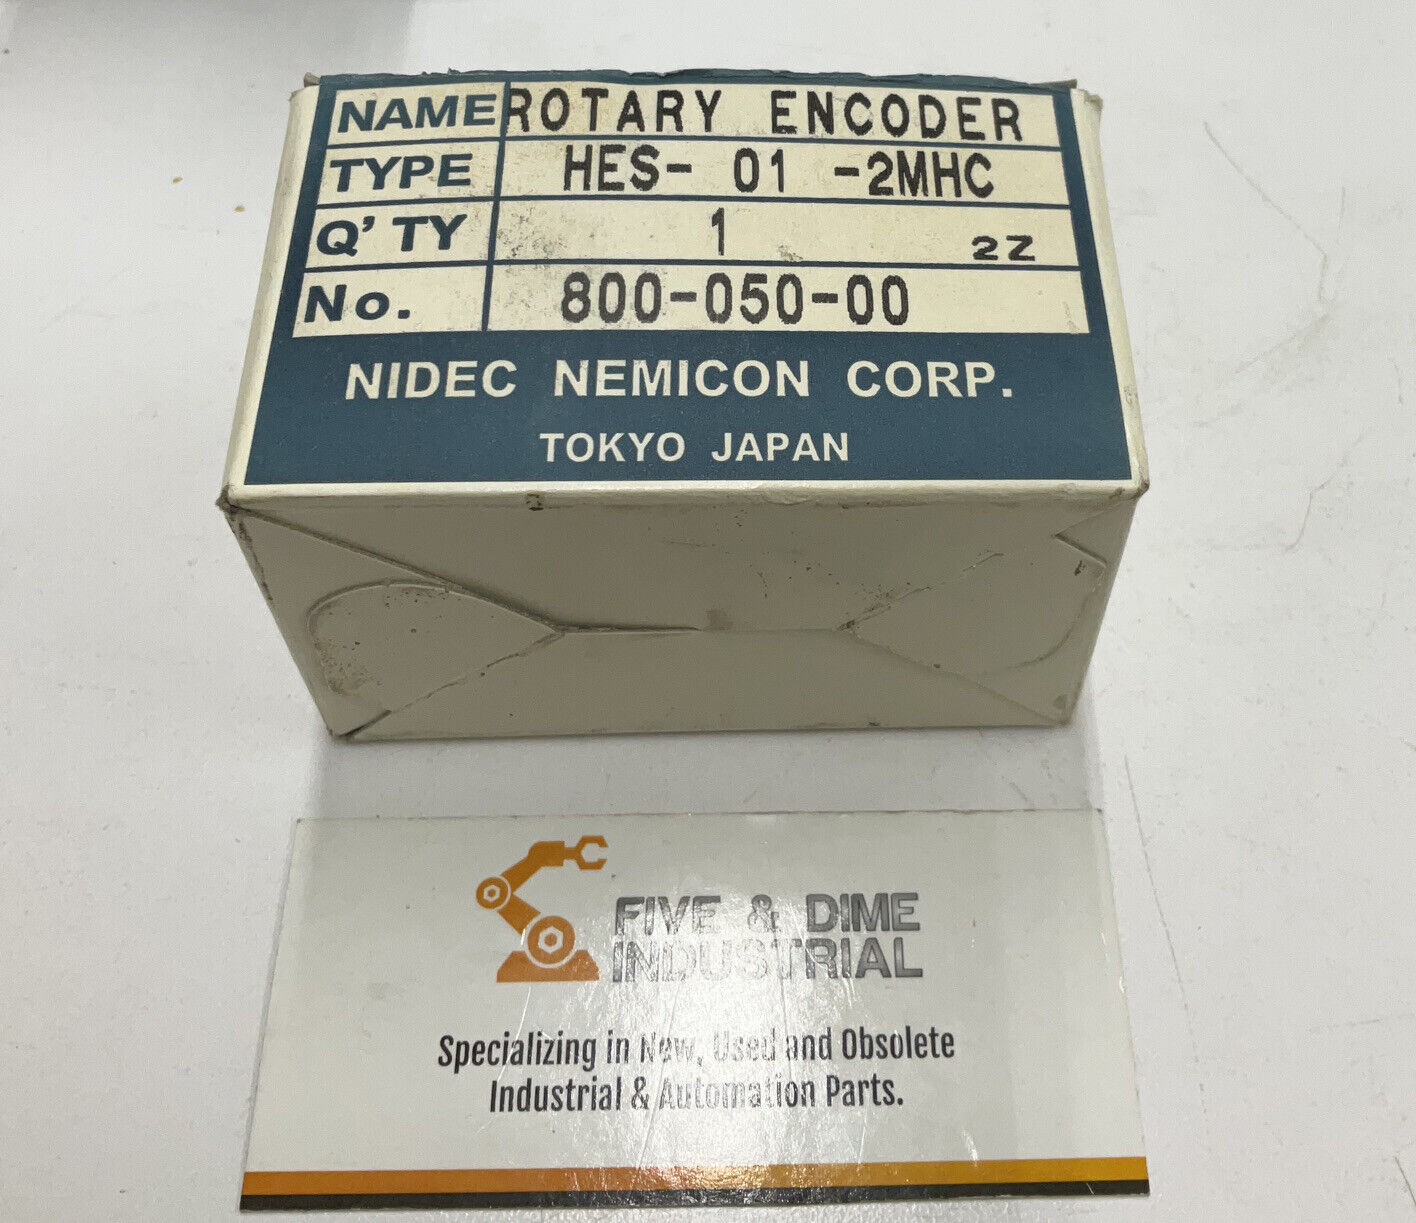 Nidec Nemicon HES-01-2MHC Rotary Encoder 800-050-00 (CL190)